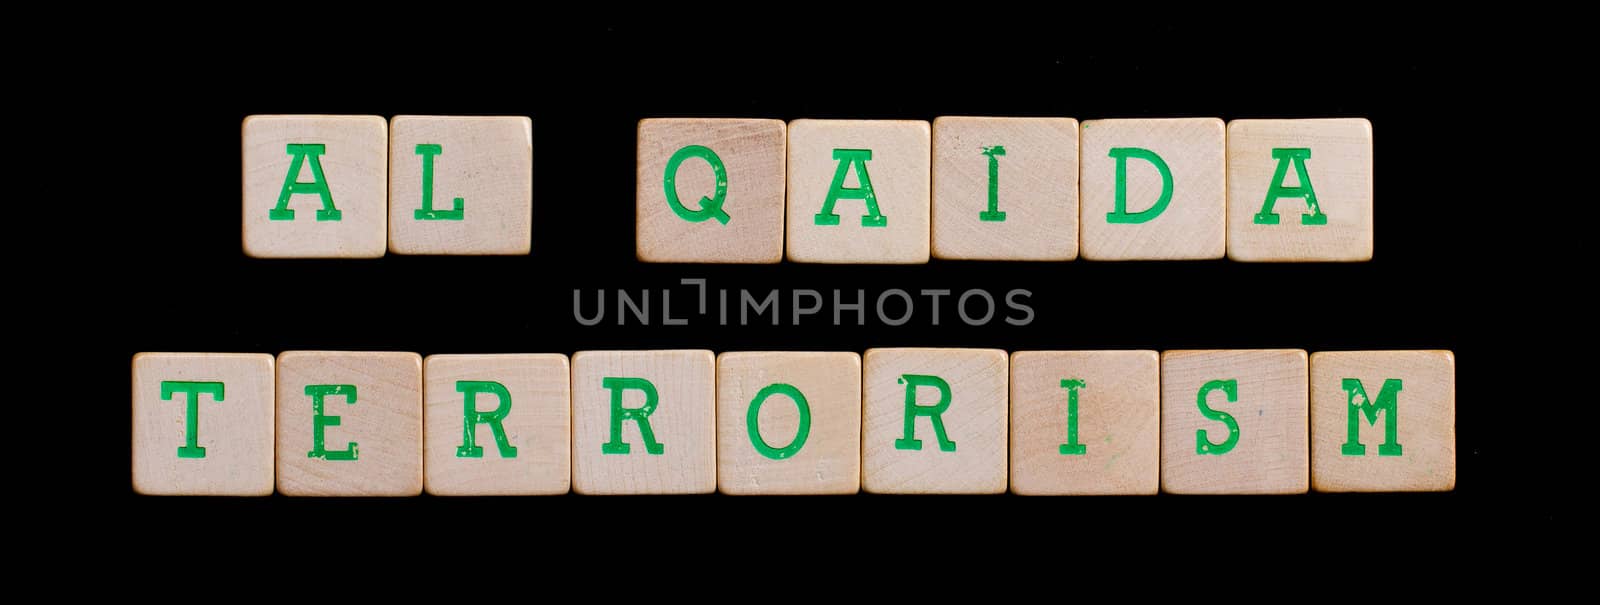 Letters on wooden blocks (alqaida terrorism)